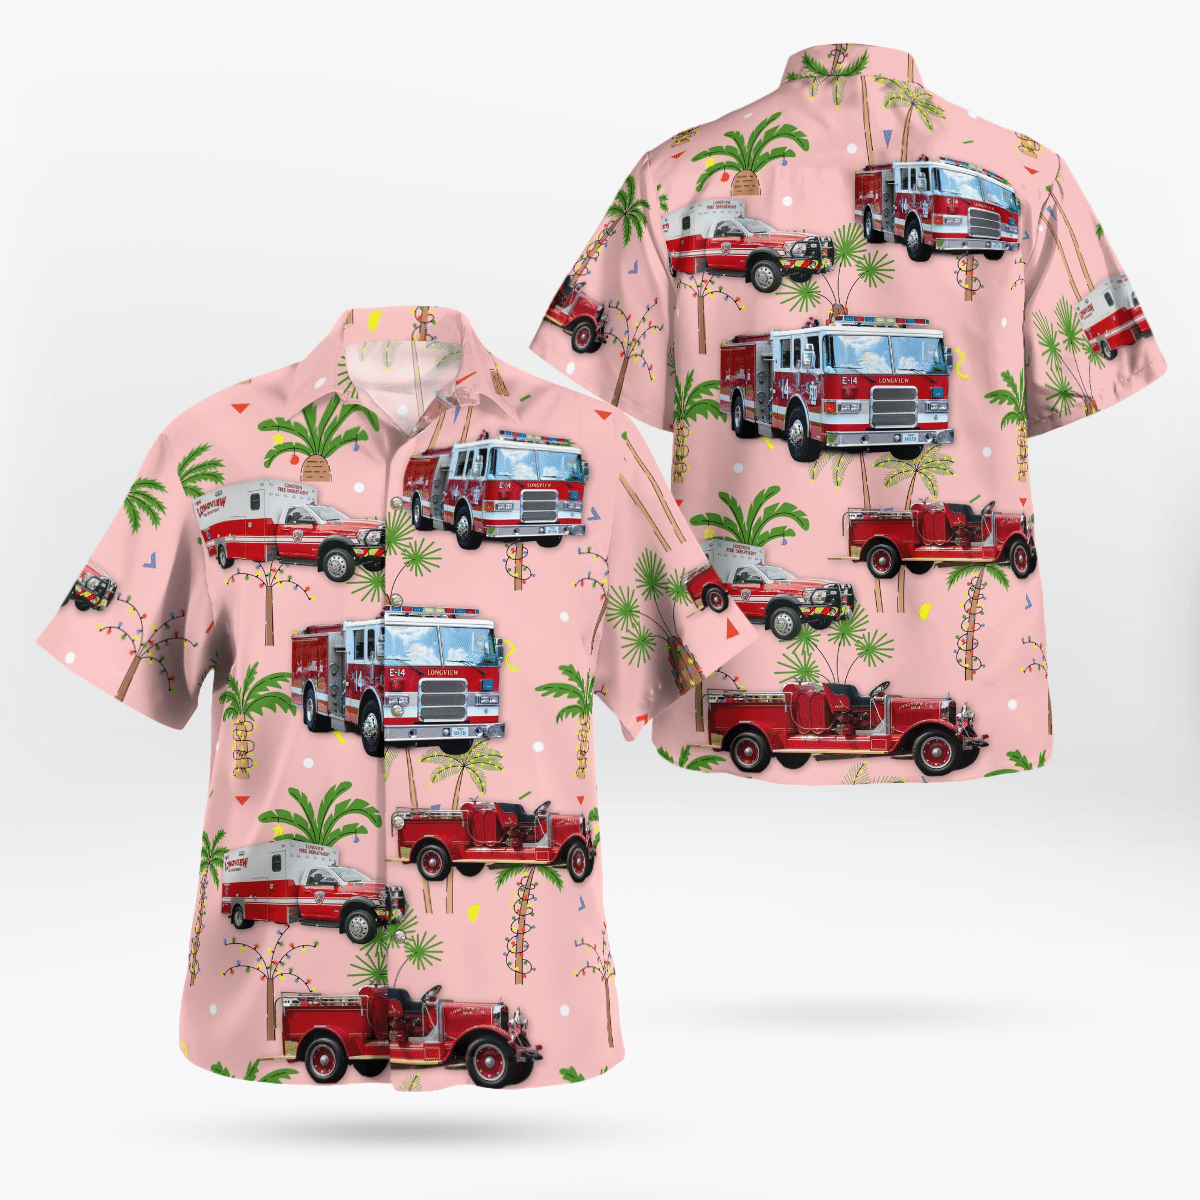 Why don't you order Hot Hawaiian Shirt today? 179